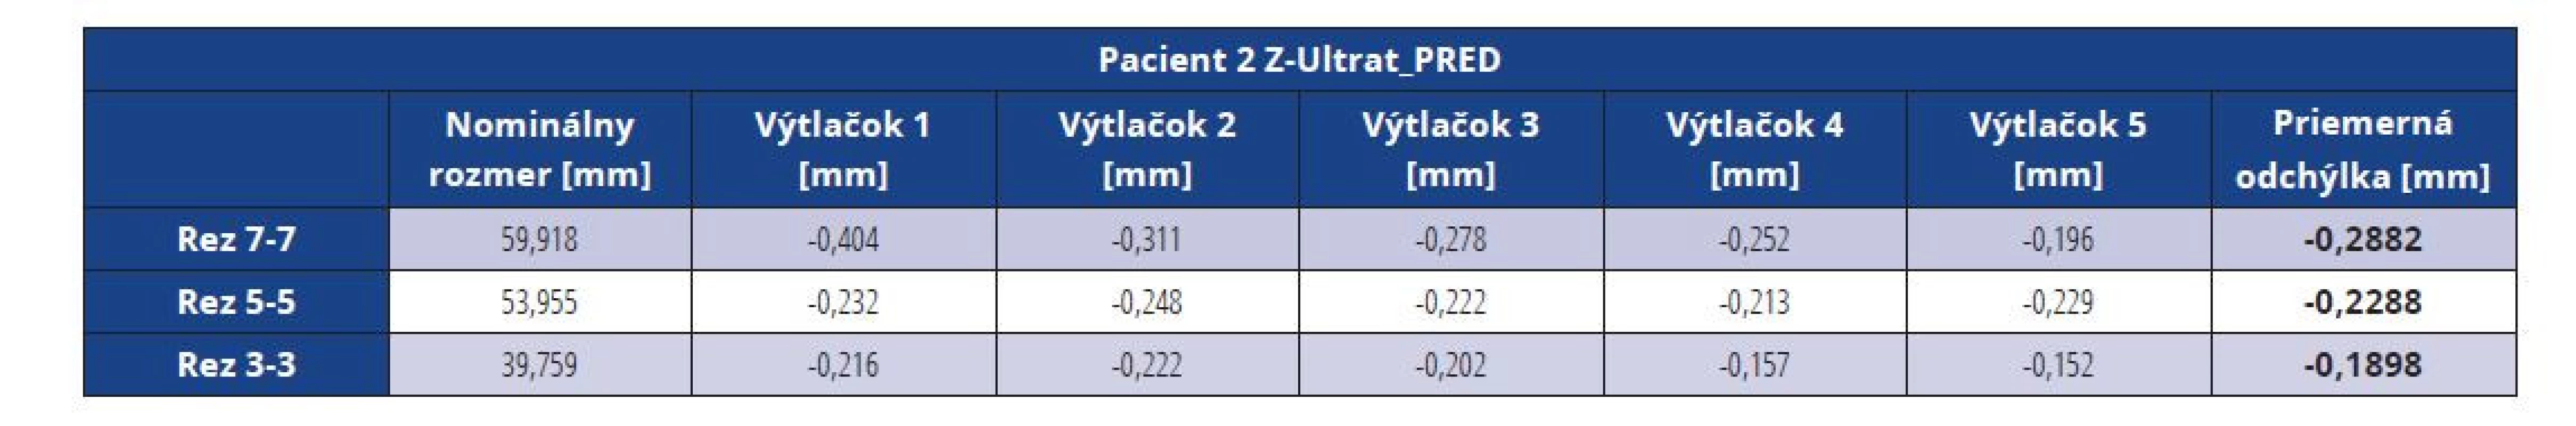 Rozmerové odchýlky master modelu pacienta 2 vytlačeného z materiálu Z-Ultrat pred vákuovaním<br>
Tab. 11 Dimensional deviations of the Z-Ultrat master model before vacuuming (patient 2)